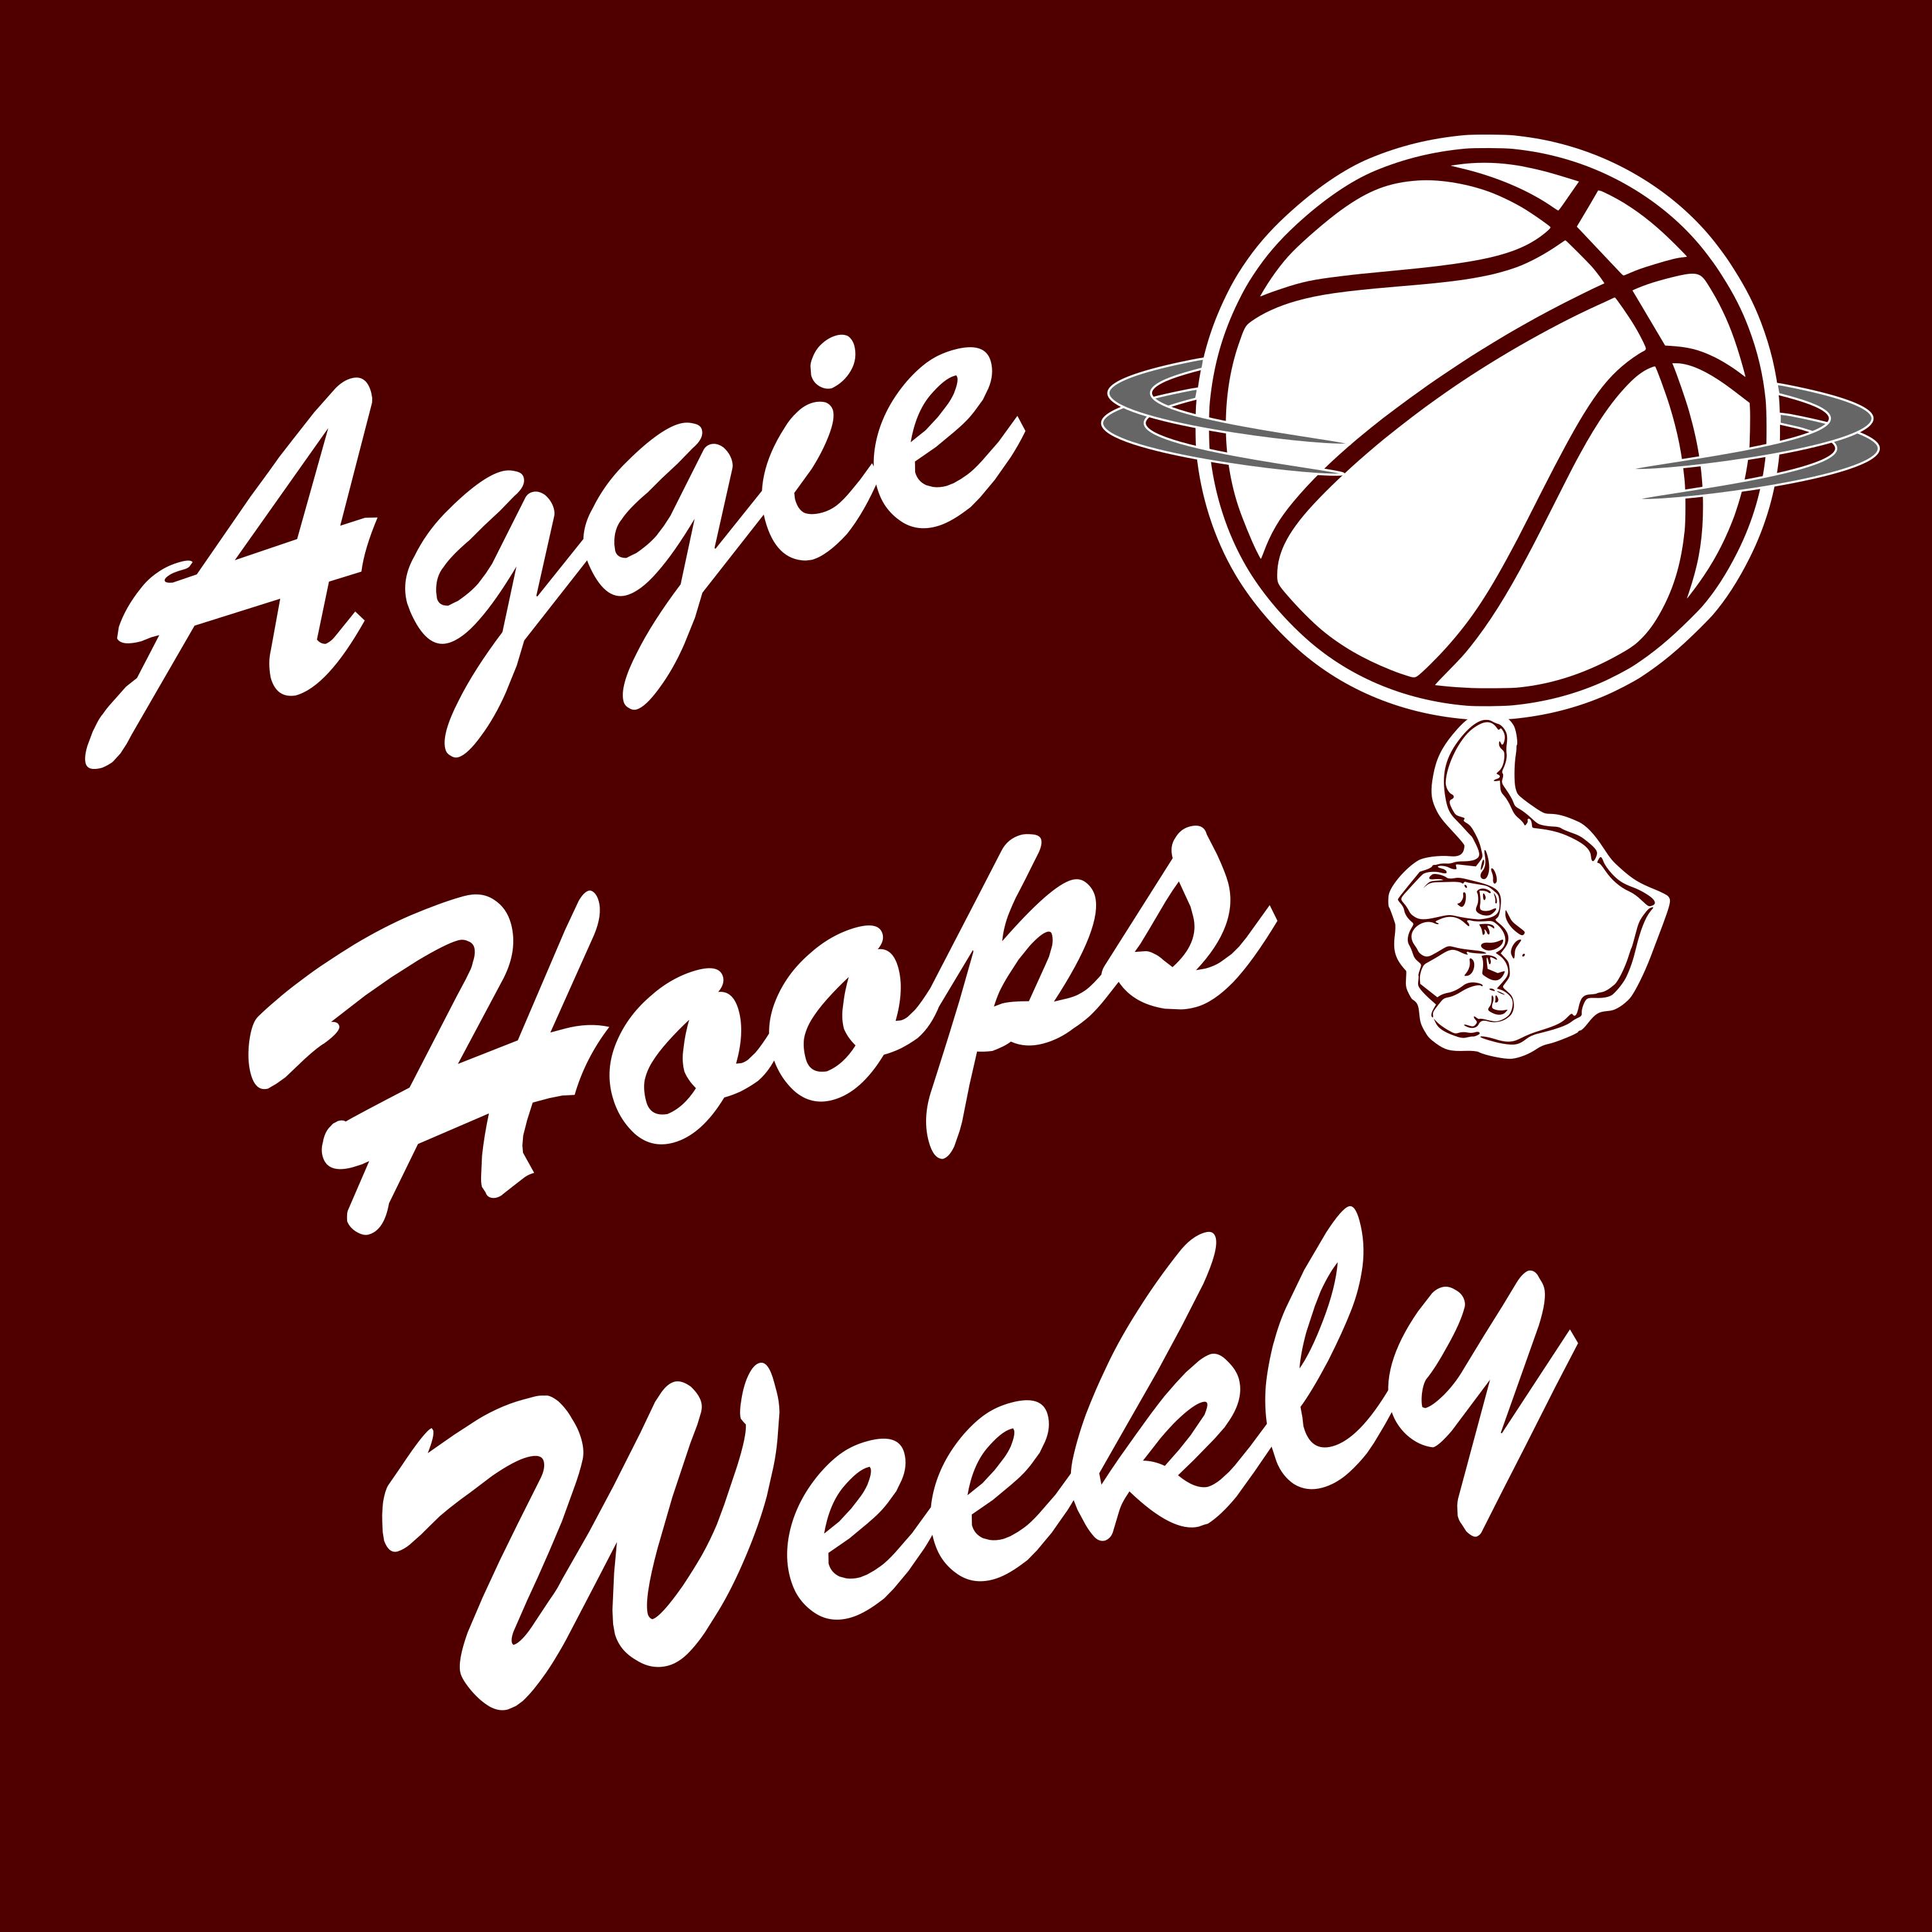 Aggie Hoops Weekly: Tough Sledding